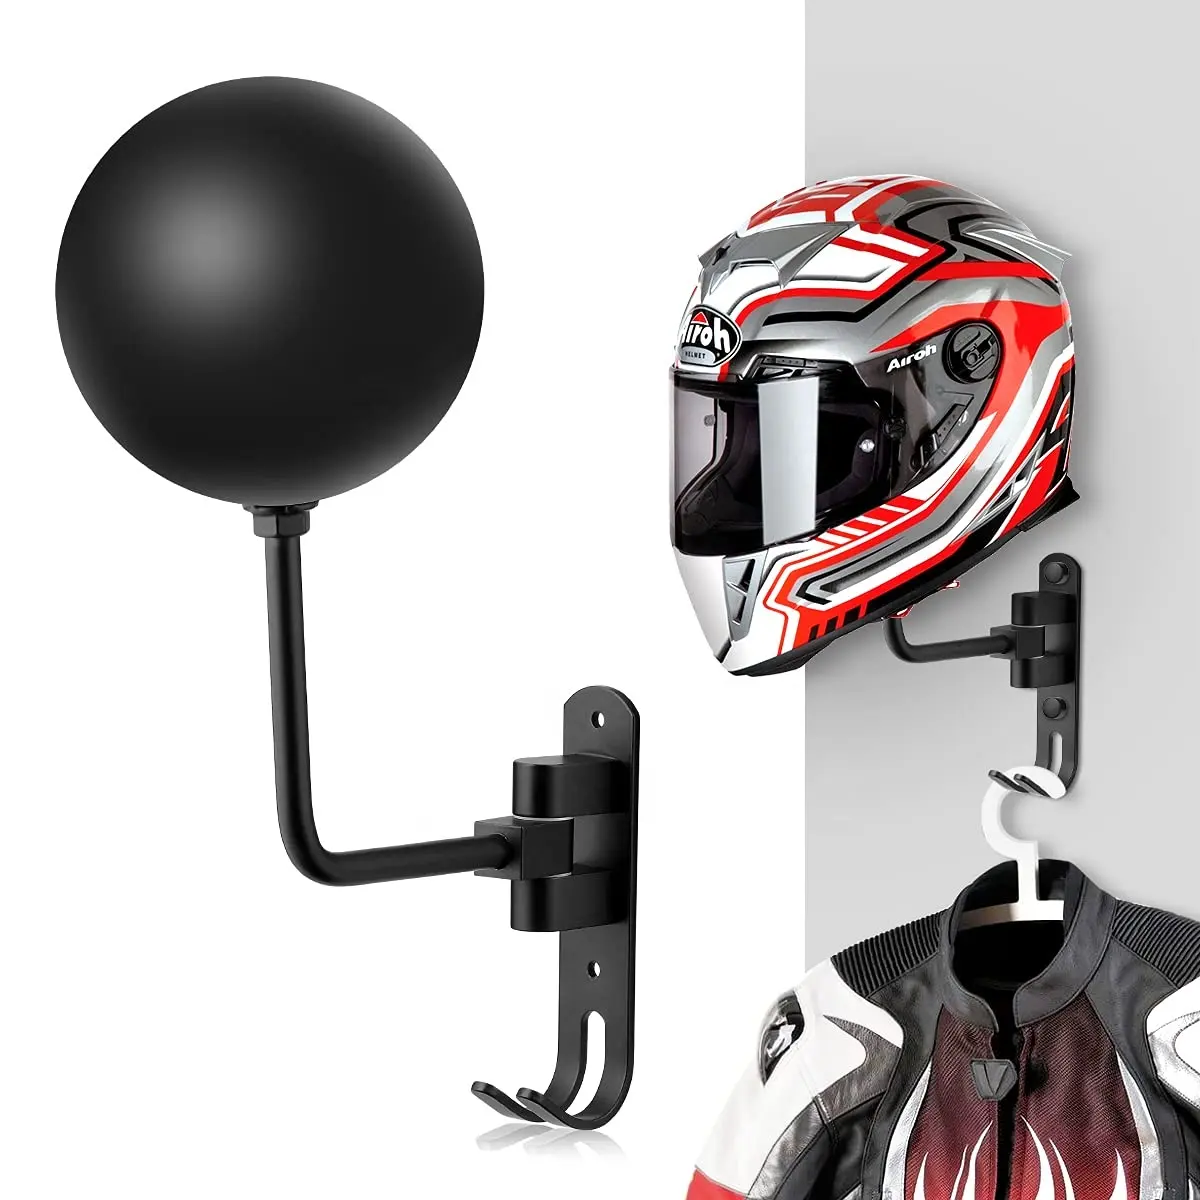 180 Degree Rotation Motorcycle Accessories Helmet Key Holder Hook with 2 Hooks